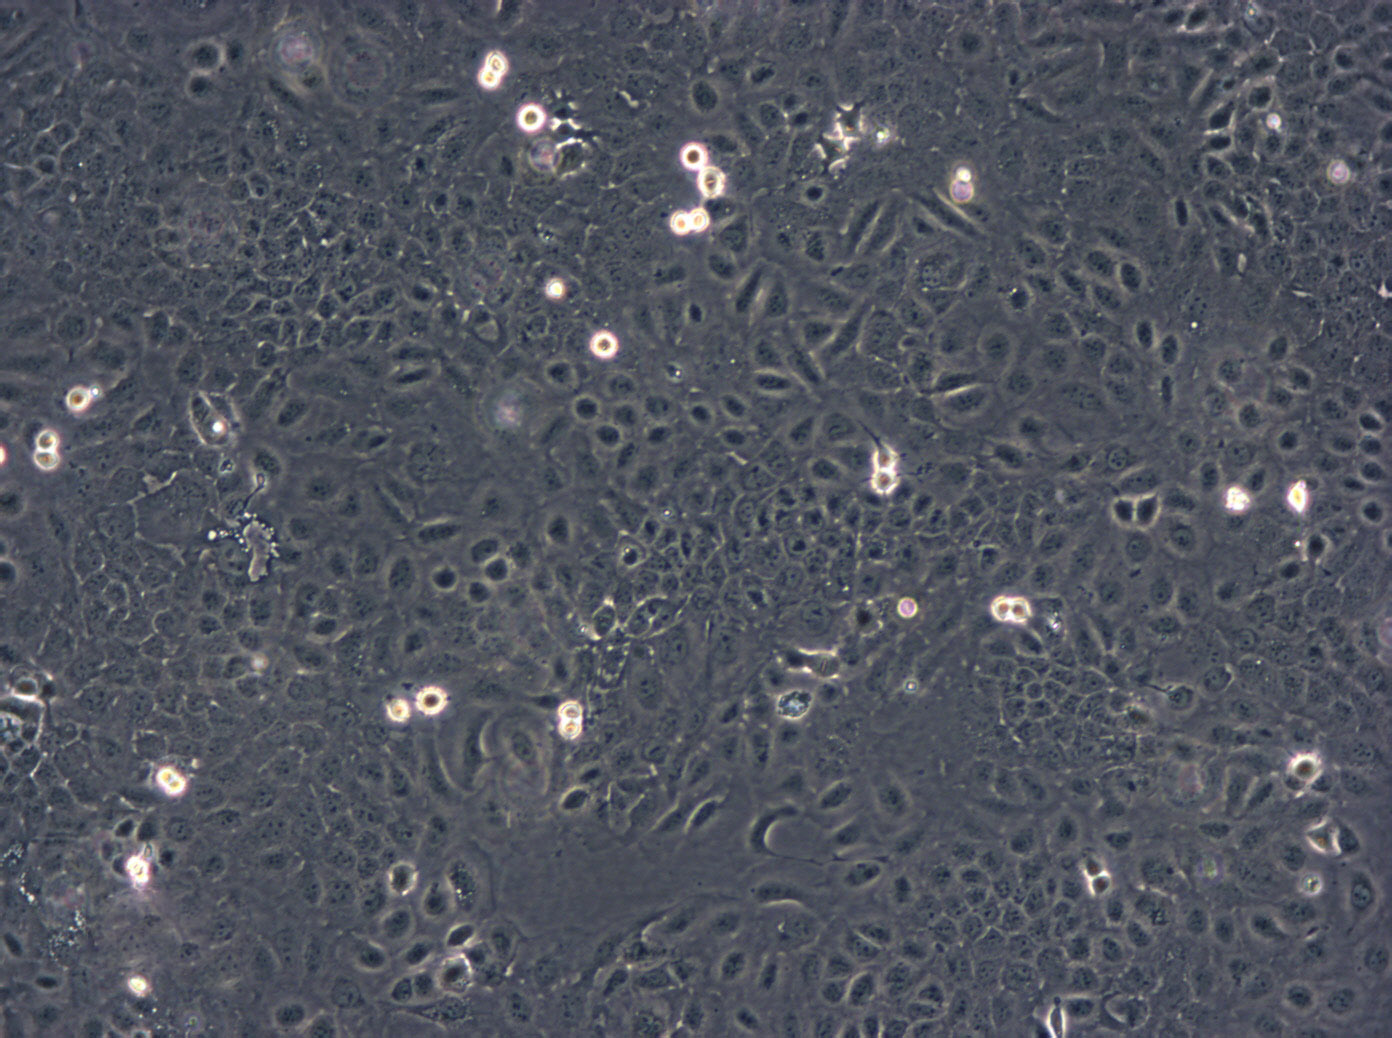 SNU-387 cell line人肝癌细胞系,SNU-387 cell line